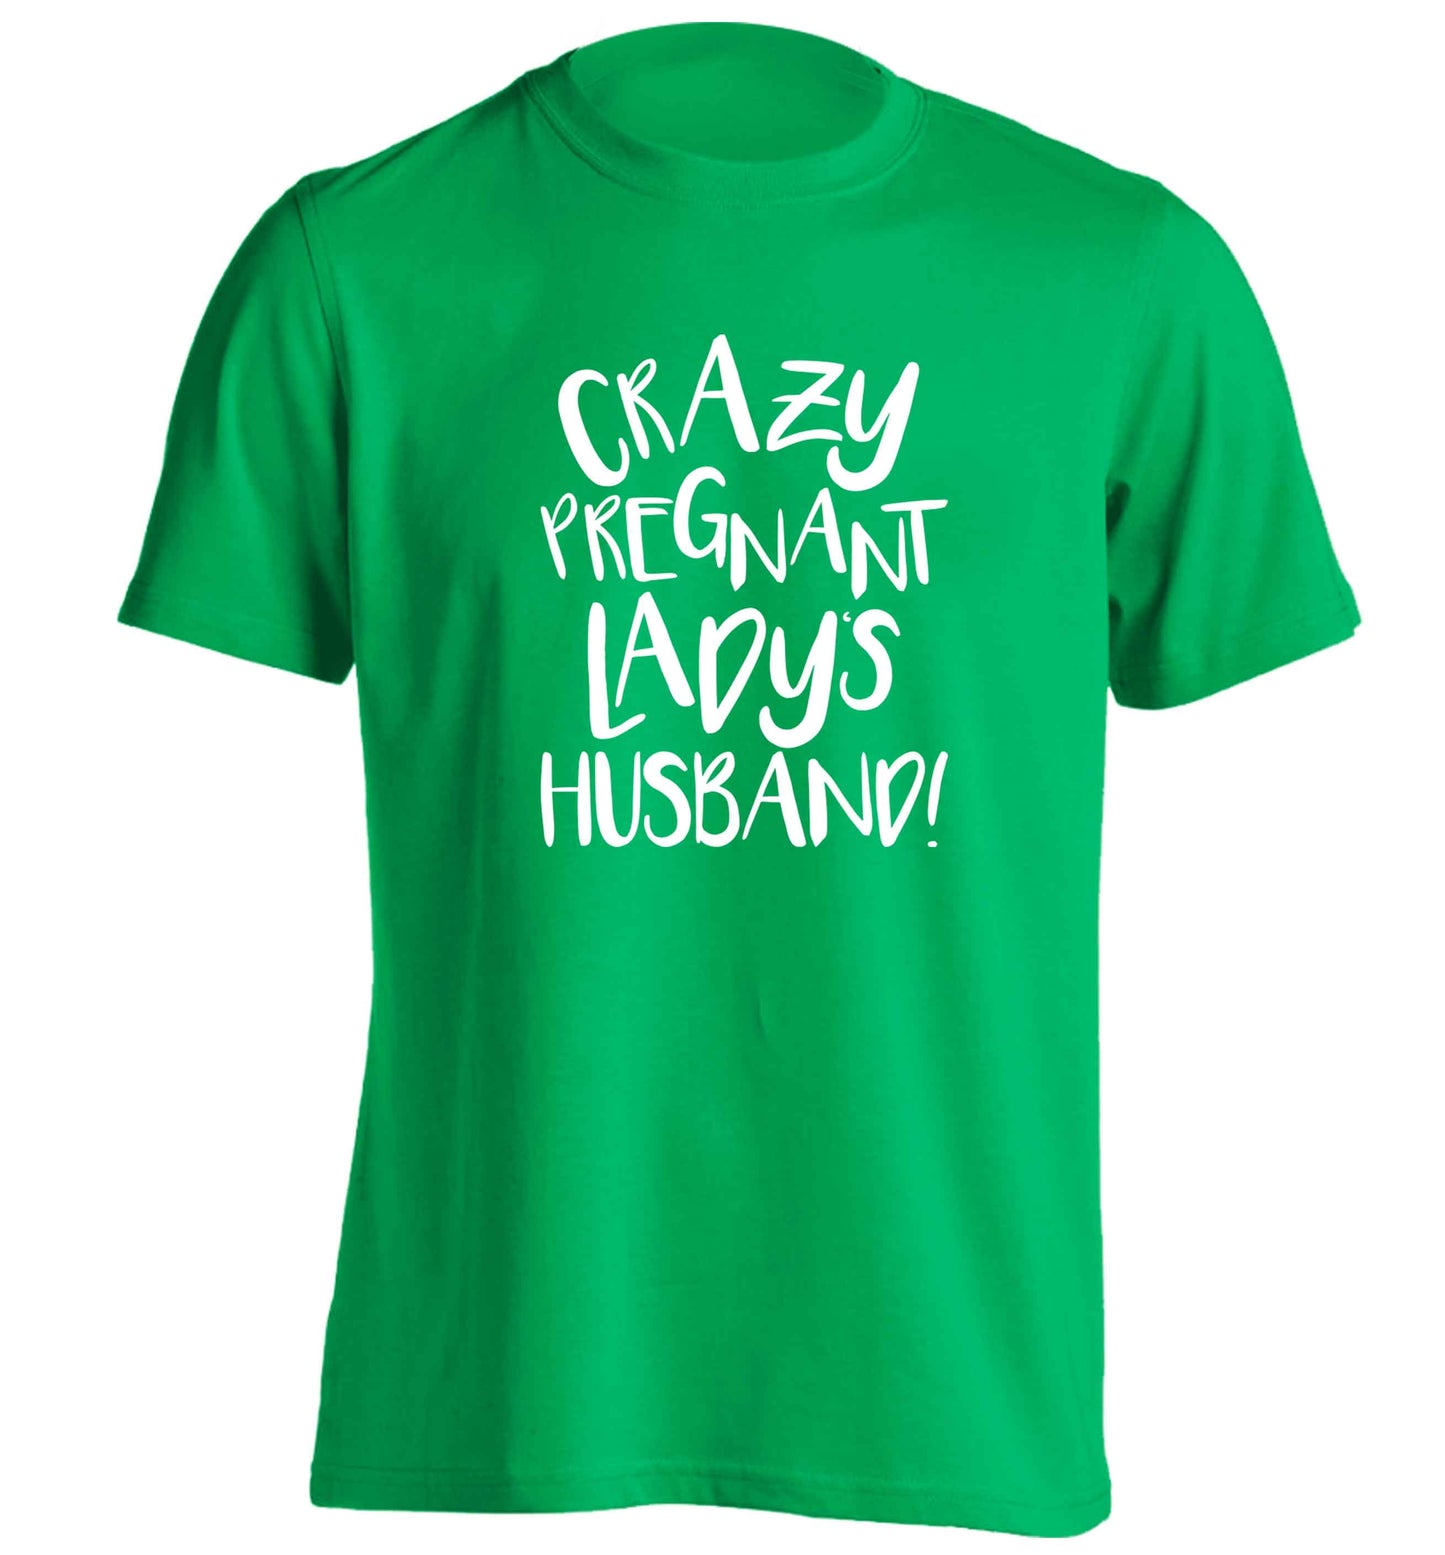 Crazy pregnant lady's husband adults unisex green Tshirt 2XL